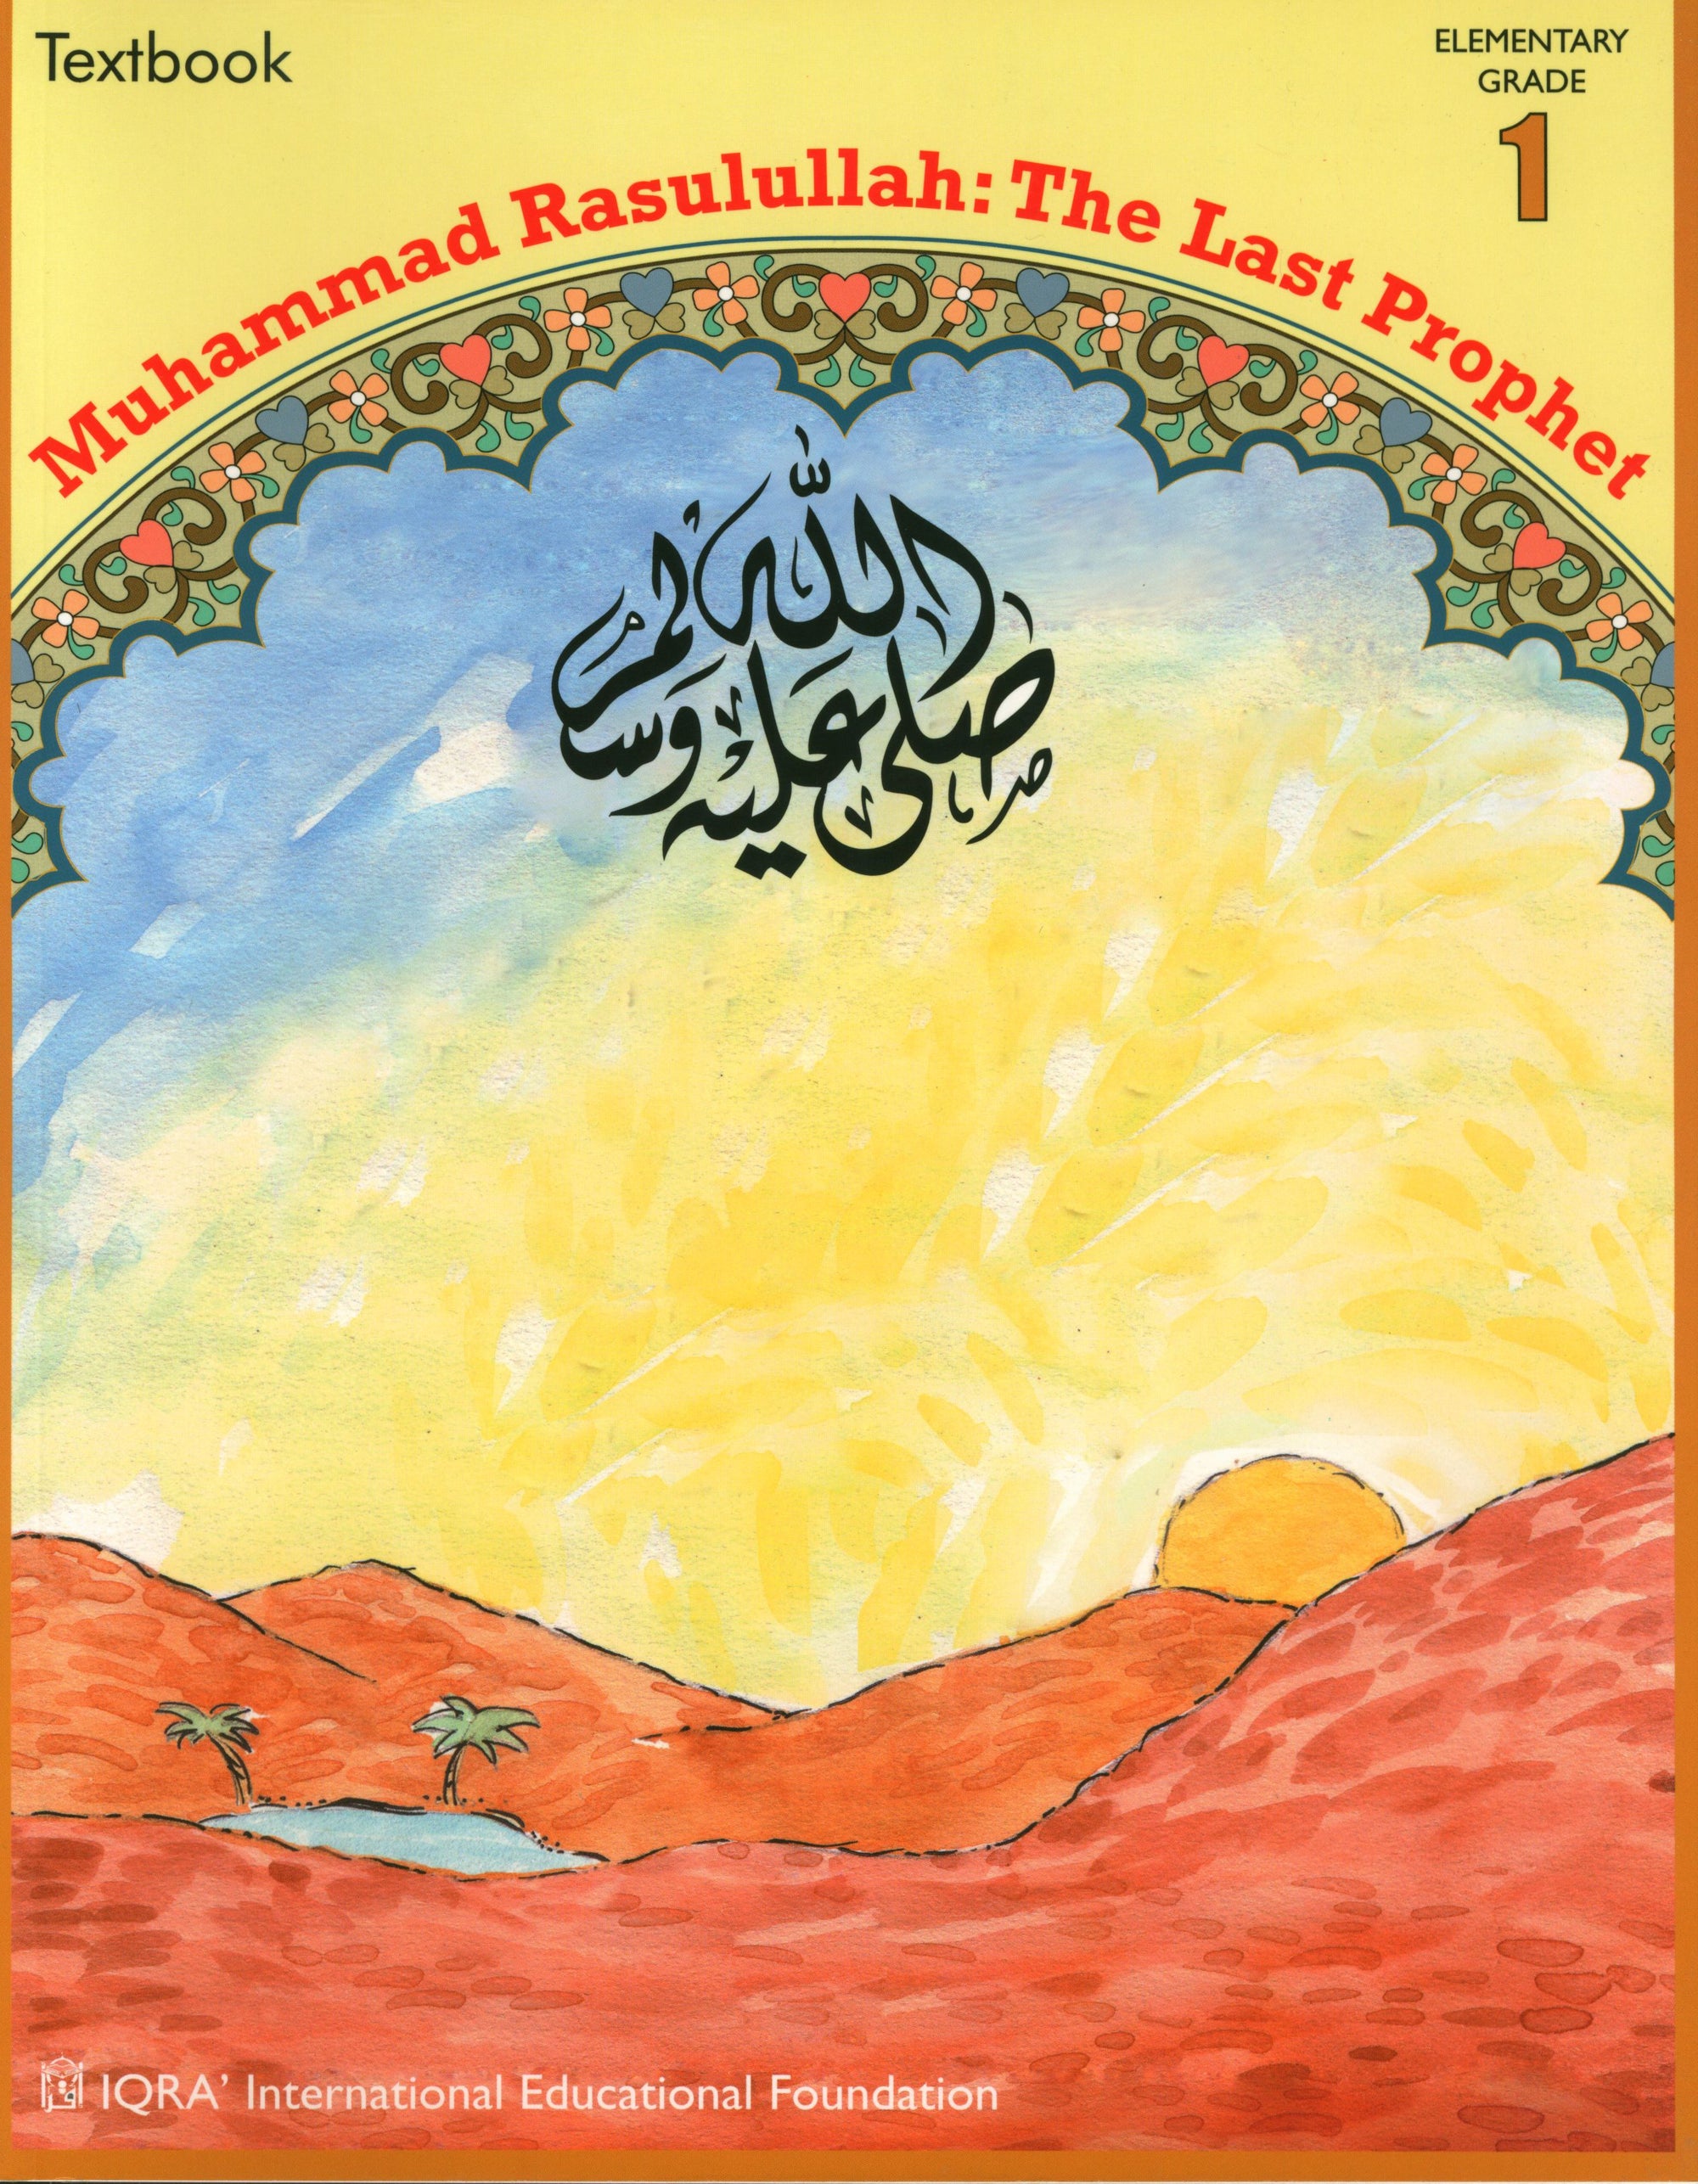 Muhammad Rasulullah The Last Prophet Textbook - 1st Grade